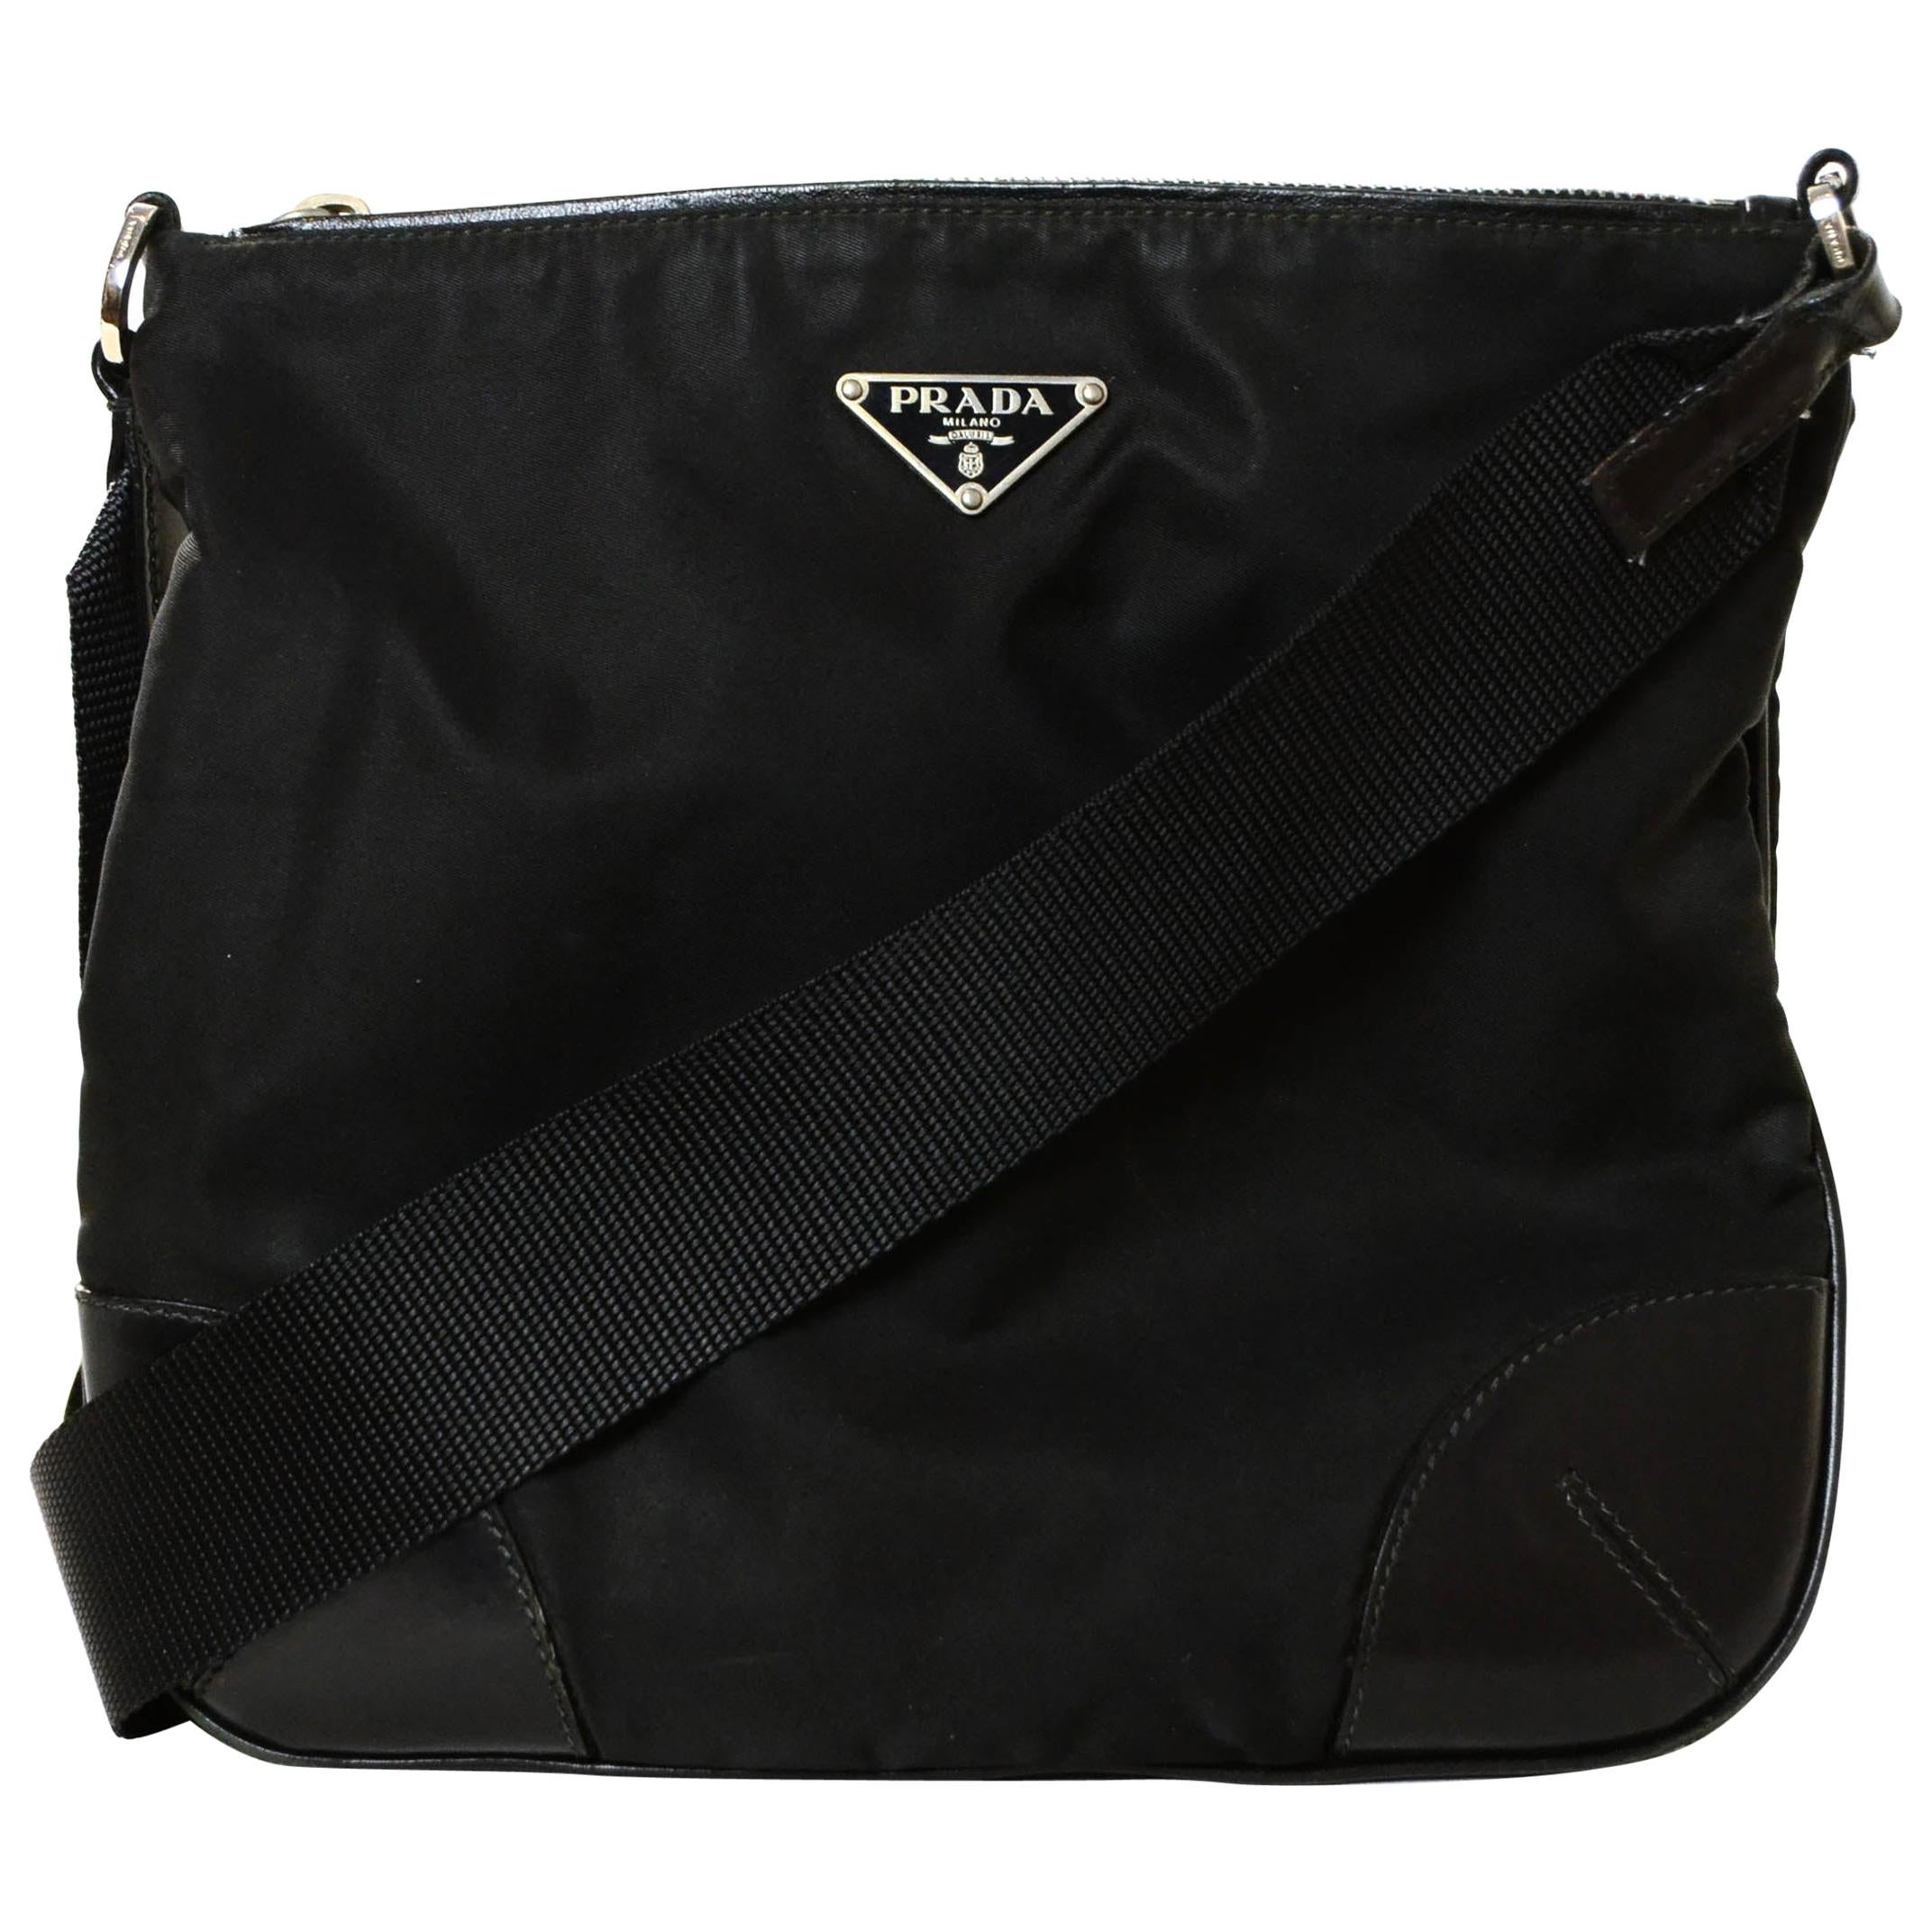 Prada Black Nylon Messenger Bag w/ Leather Trim